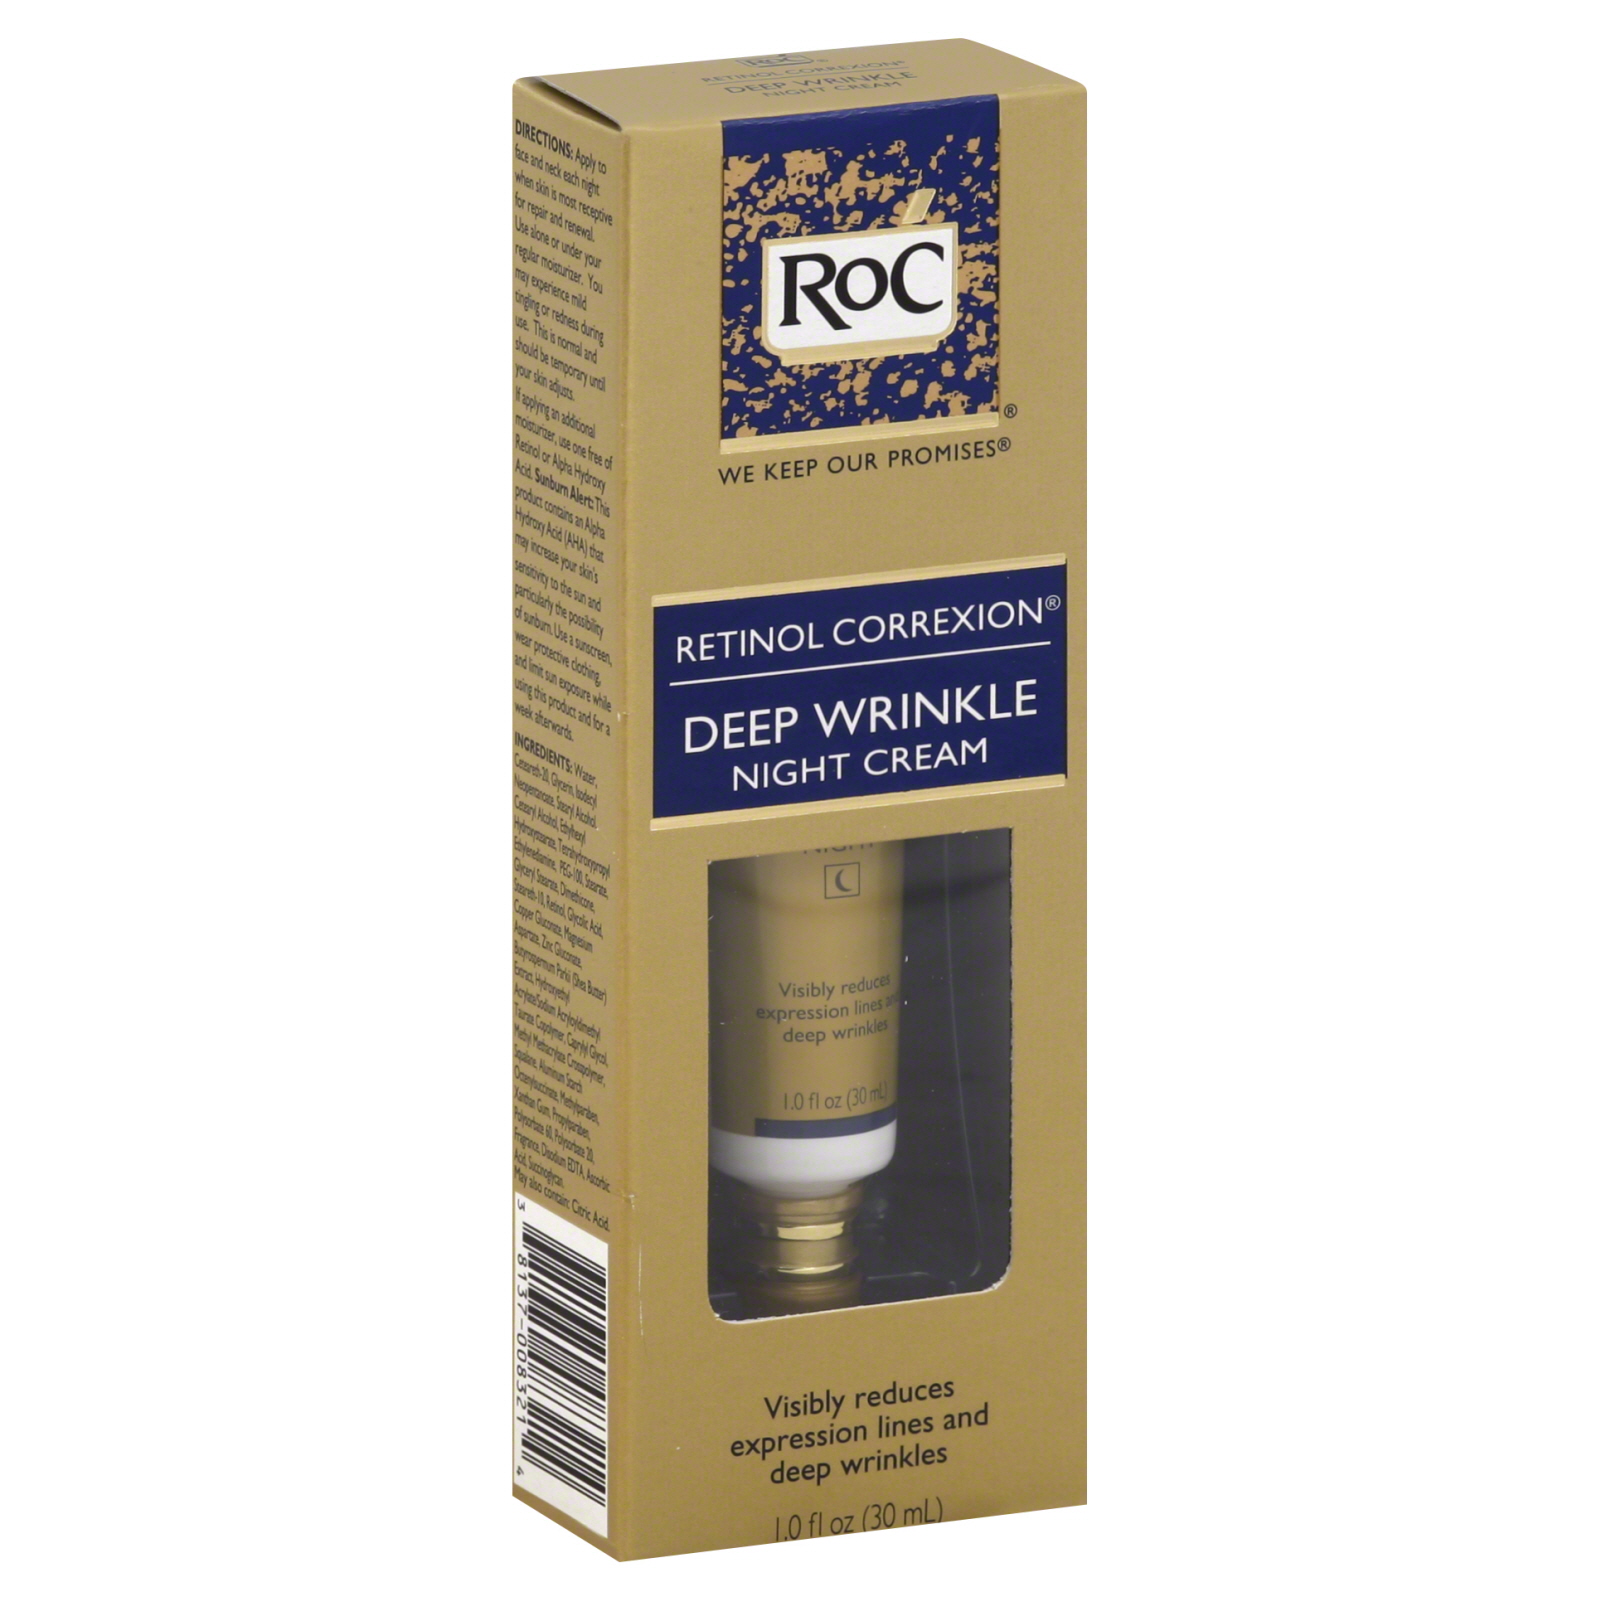 RoC Retinol Correxion Night Cream, Deep Wrinkle, 1.0 fl oz (30 ml)